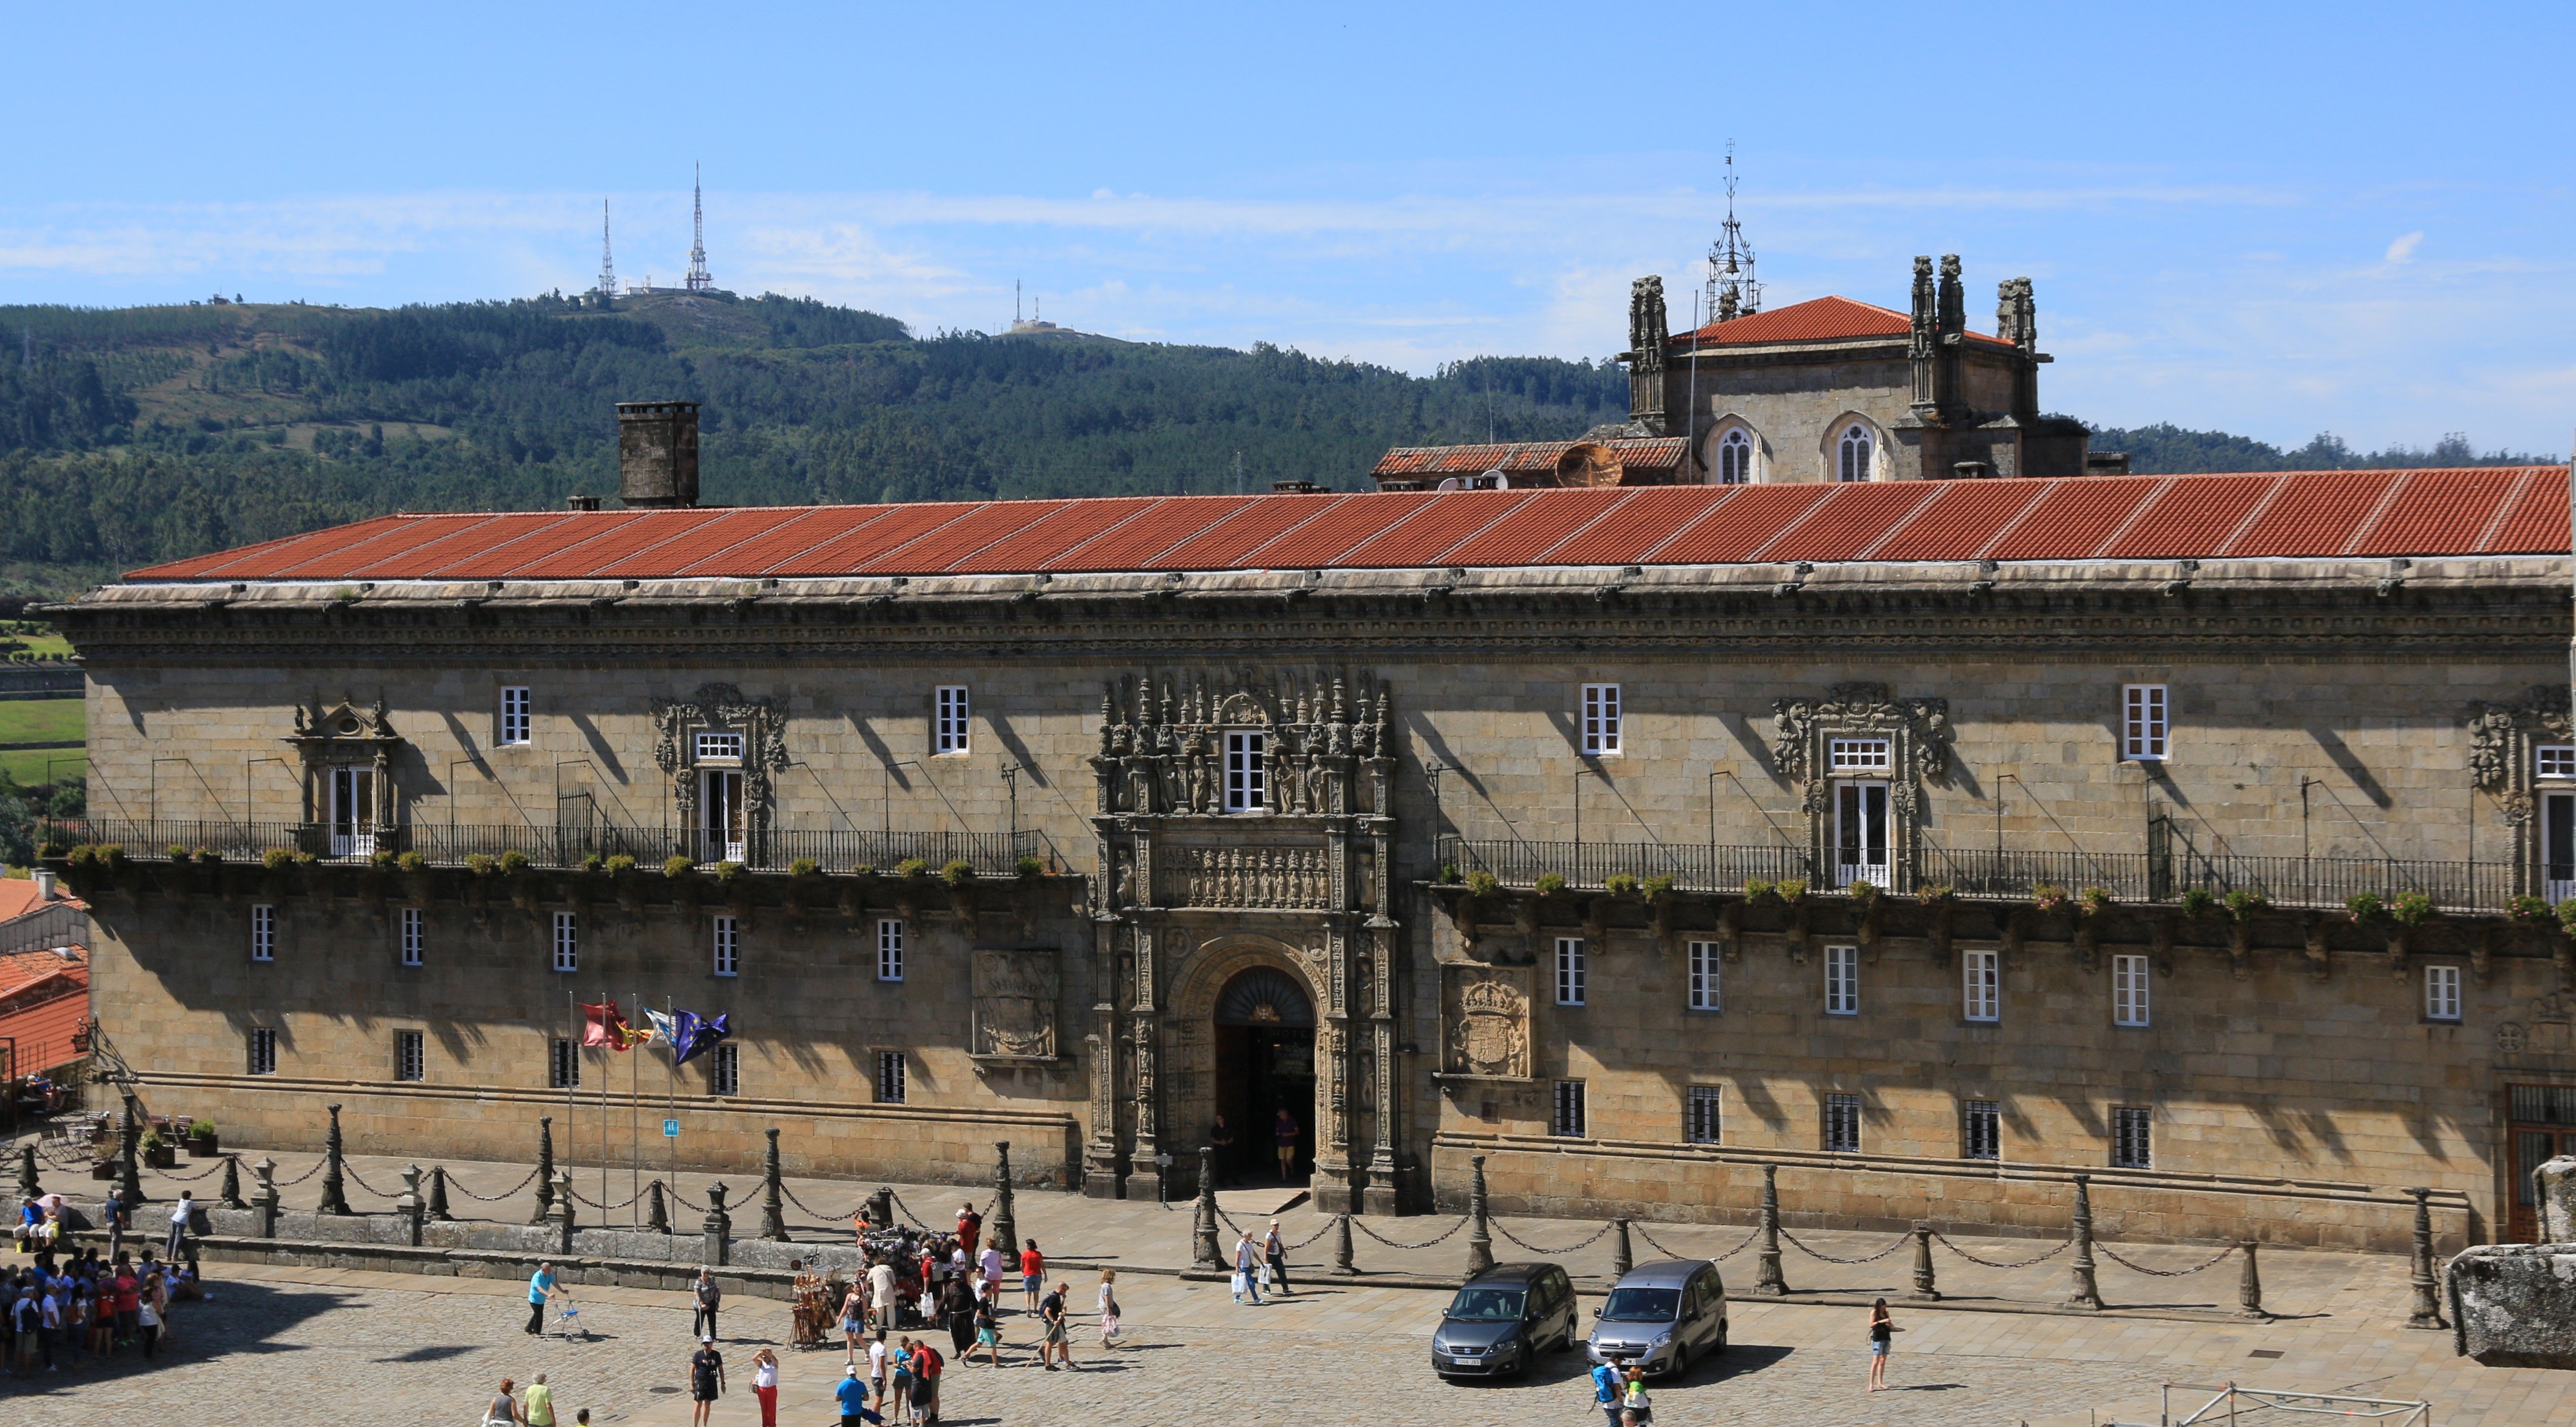 Santiago-de-Compostela